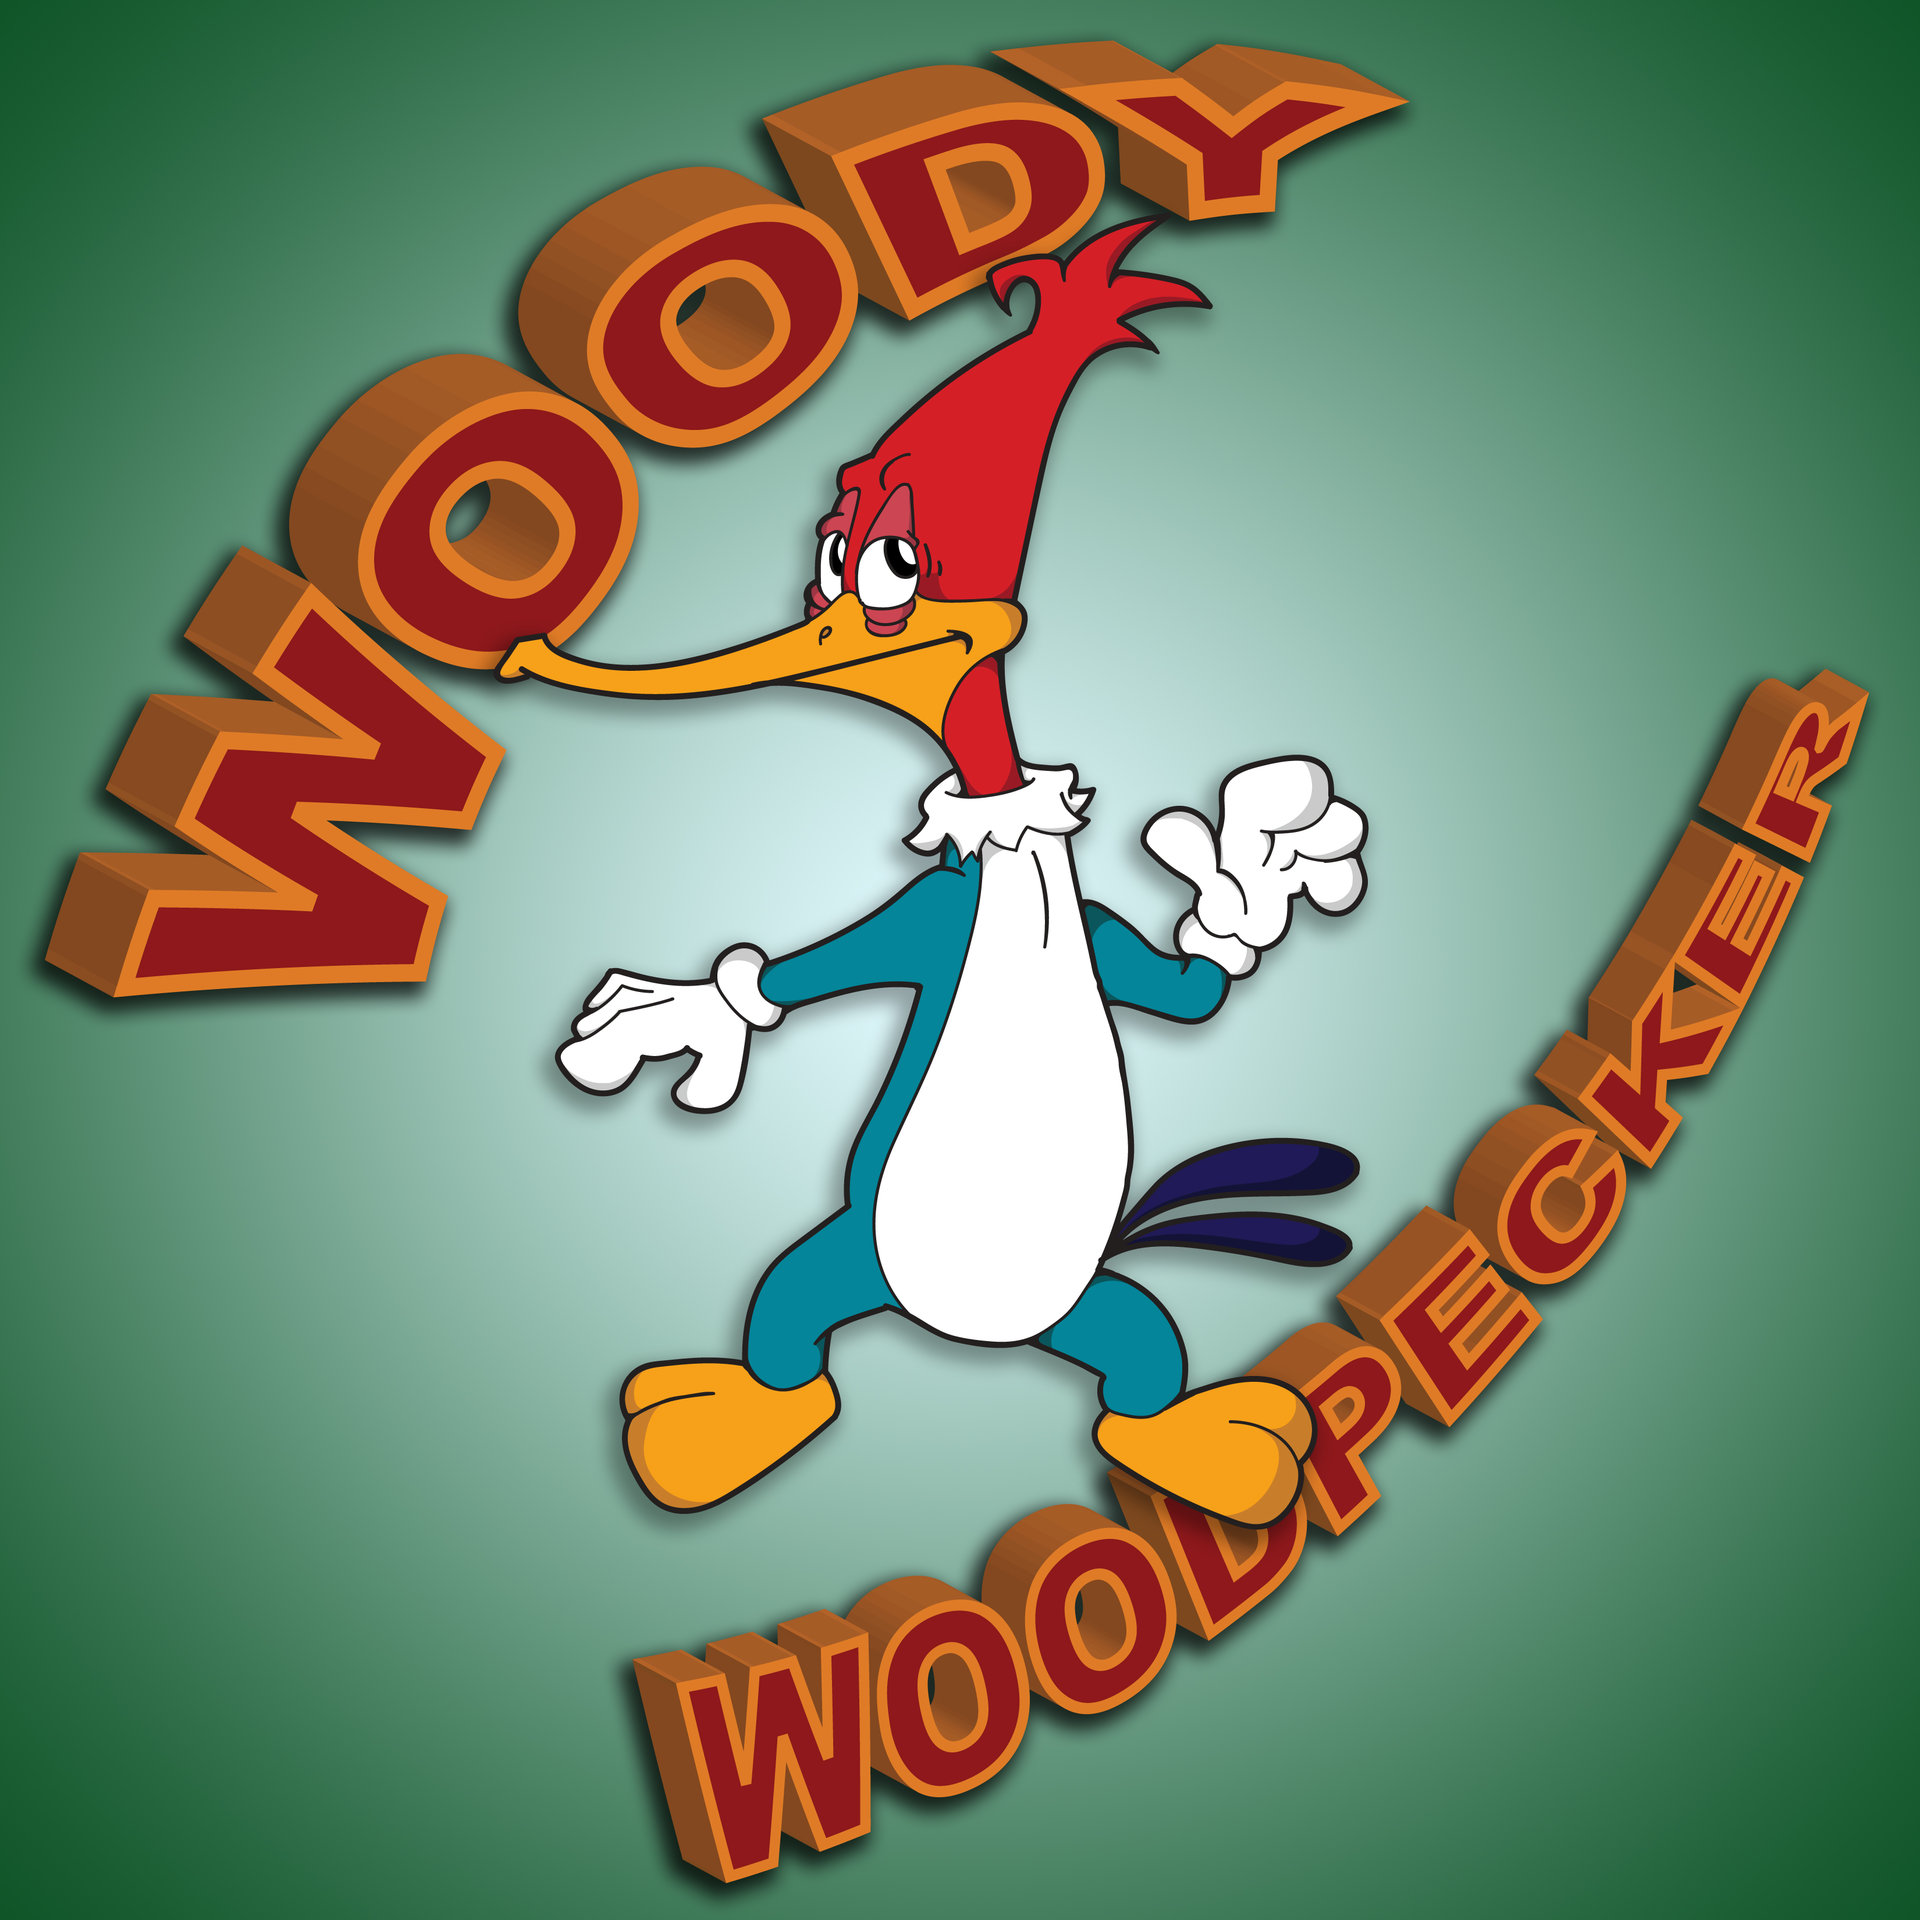 Woody Woodpecker Wallpapers